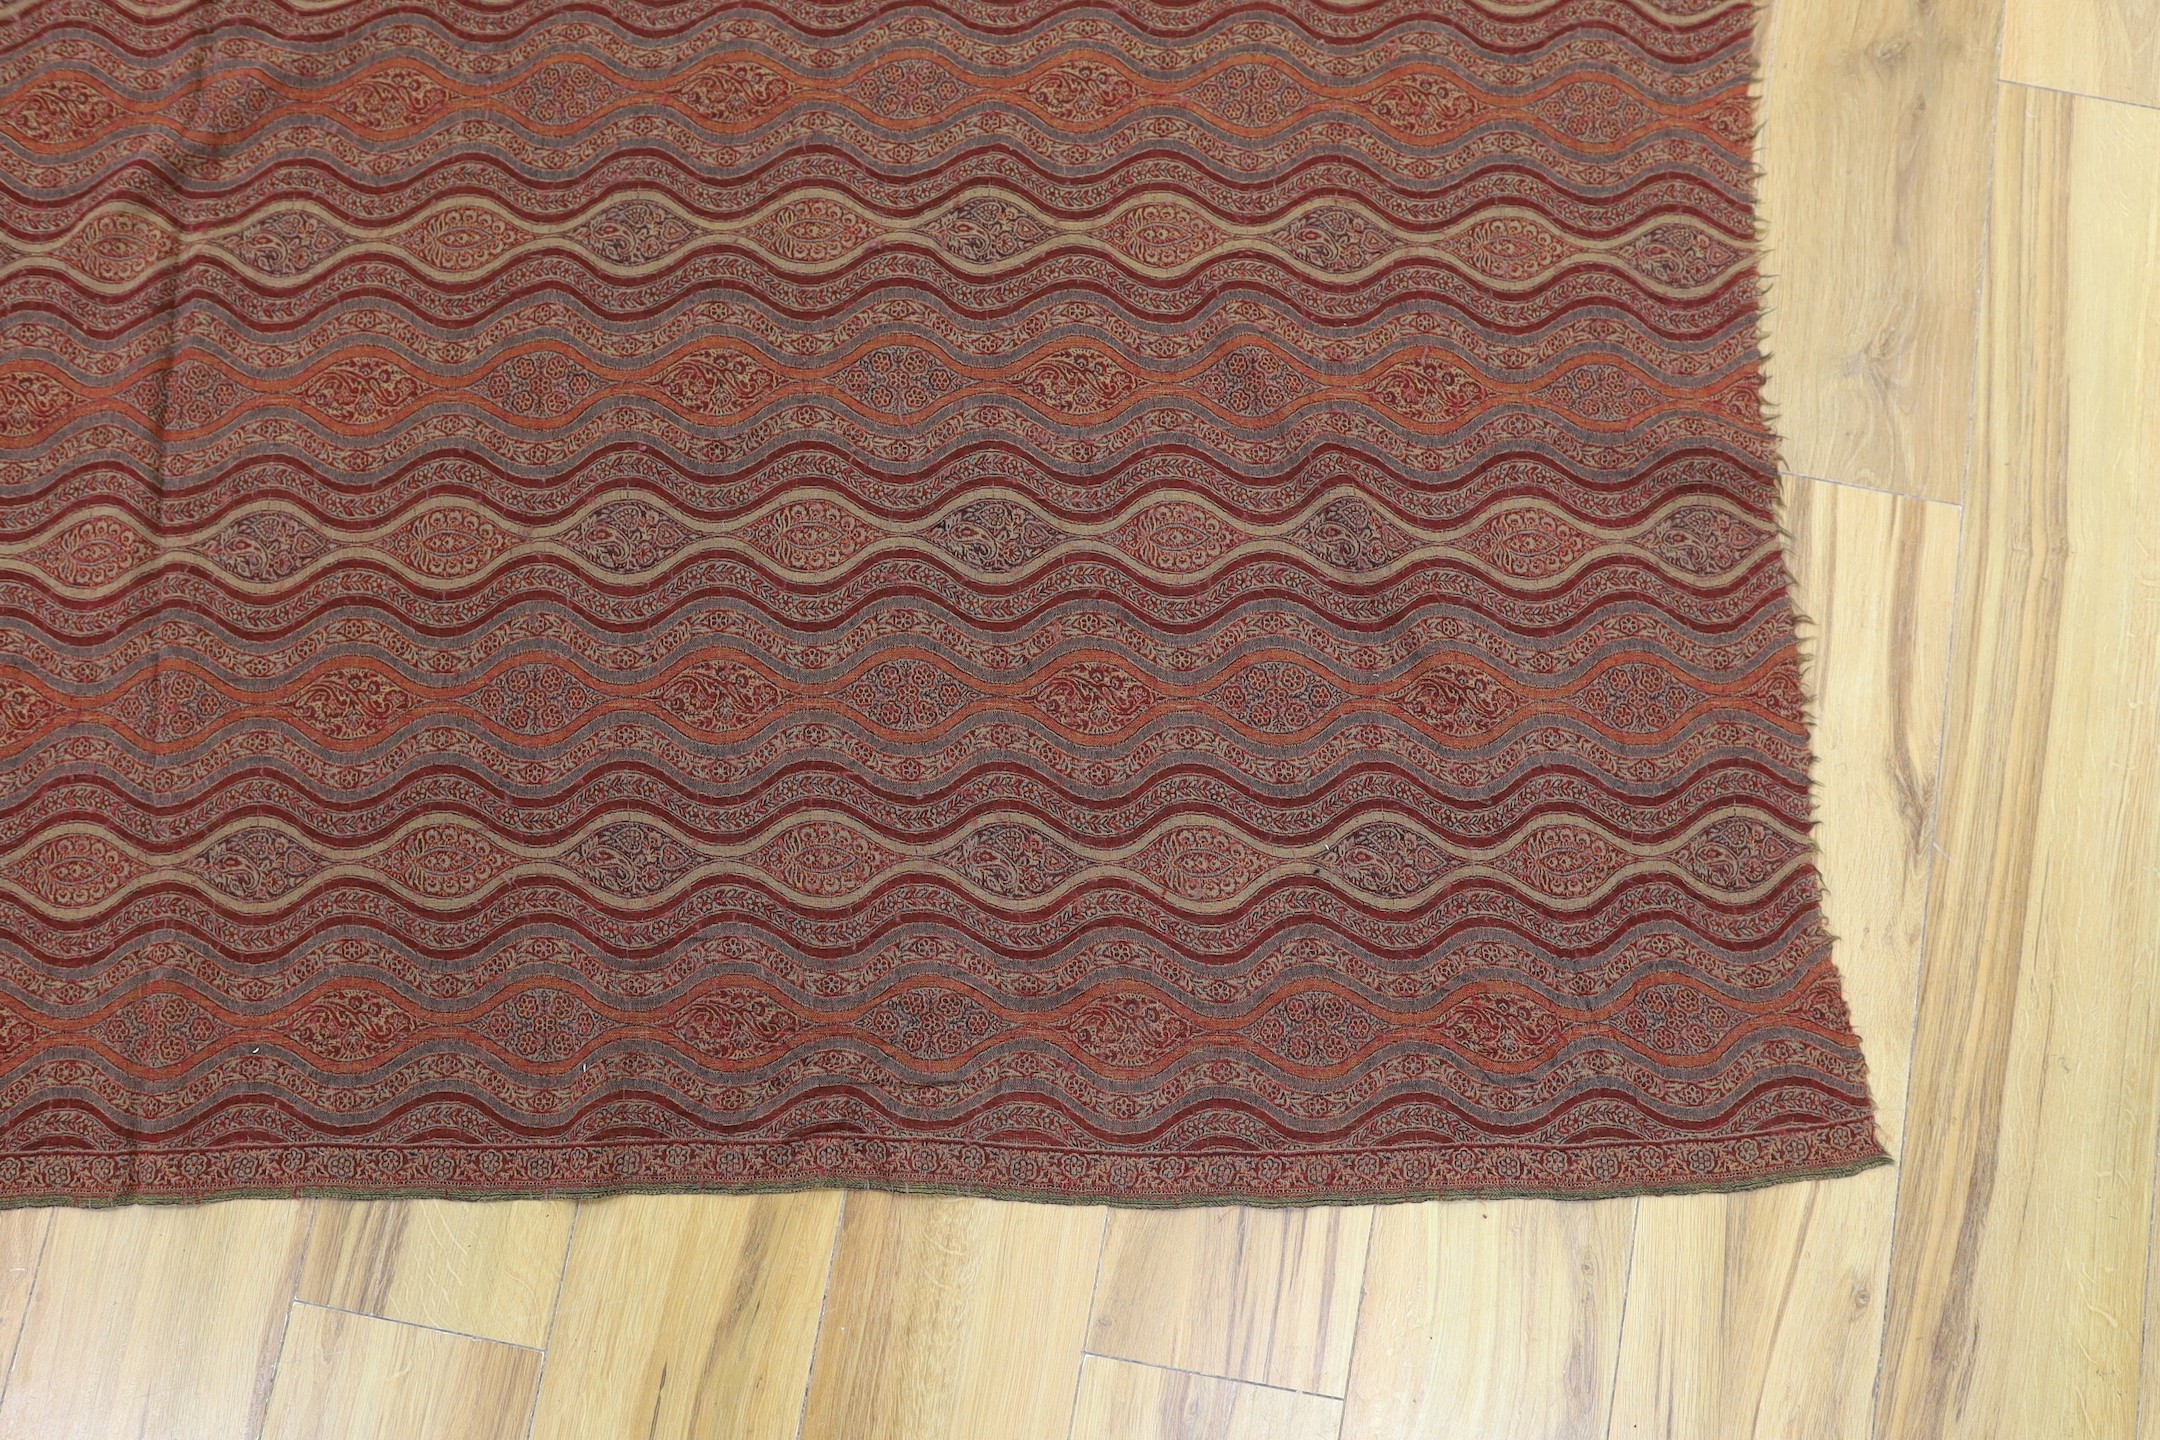 An Indian paisley shawl, 200 cms x 104cms